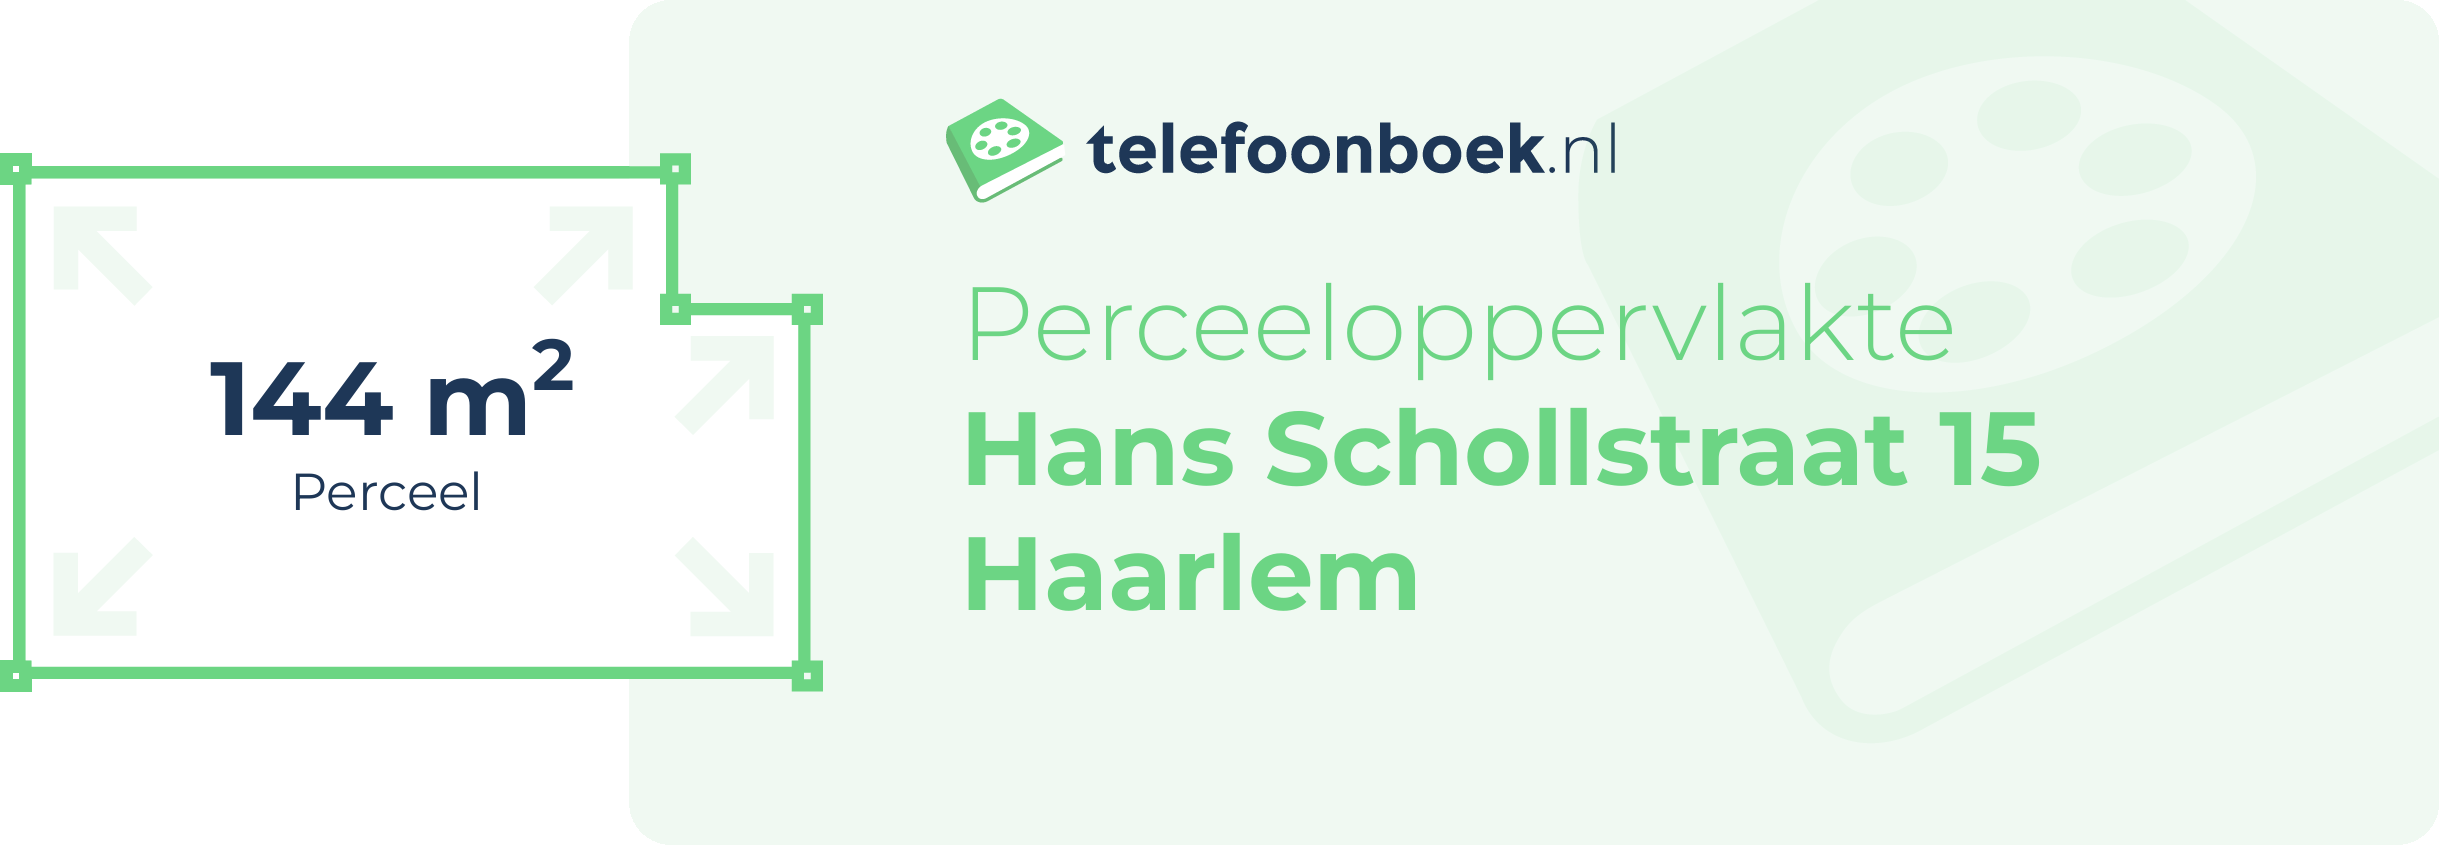 Perceeloppervlakte Hans Schollstraat 15 Haarlem